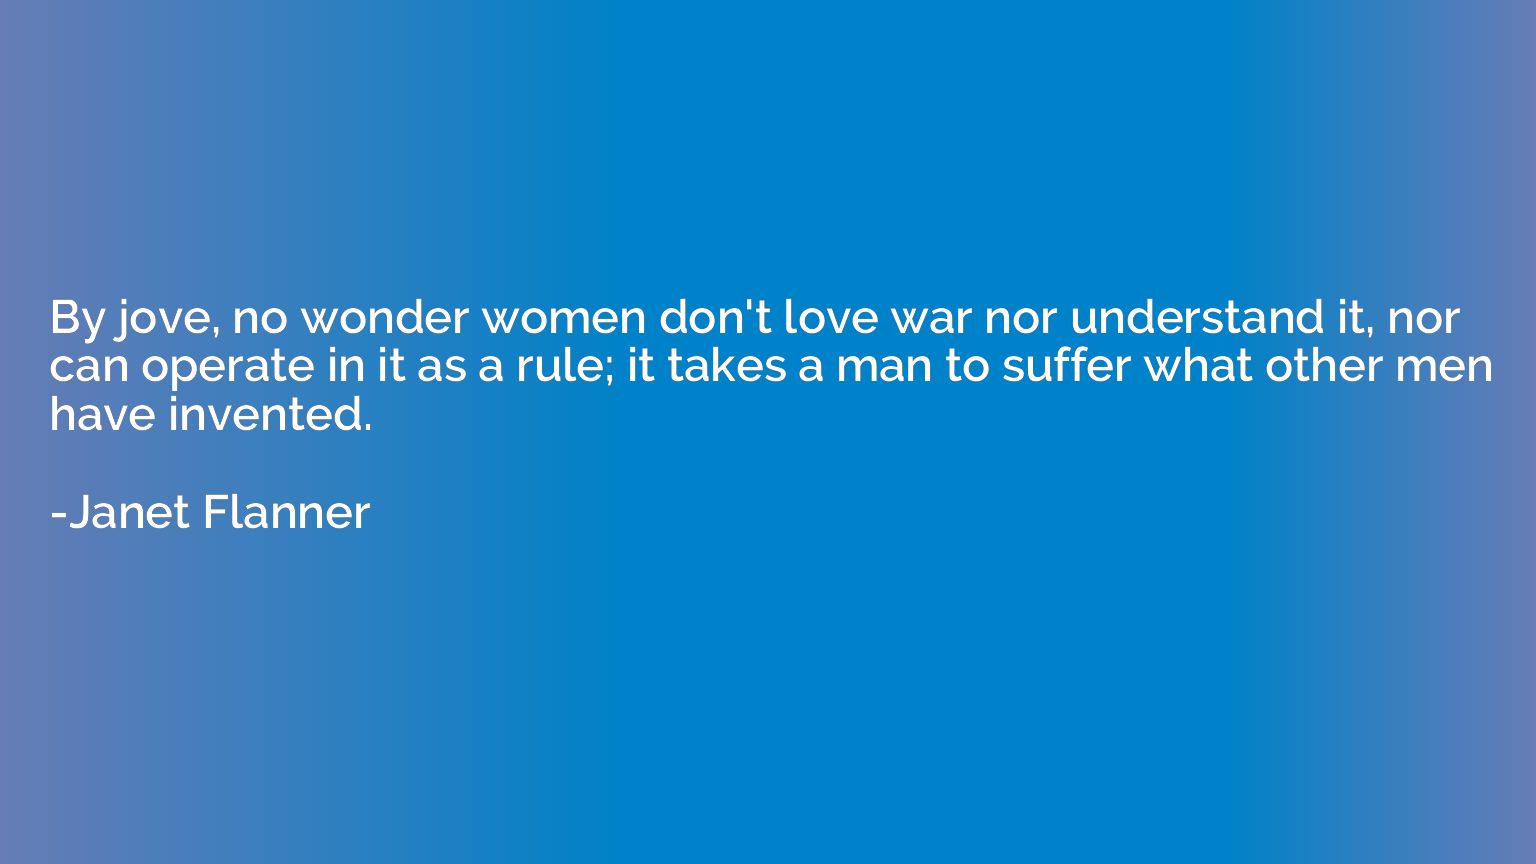 By jove, no wonder women don't love war nor understand it, n